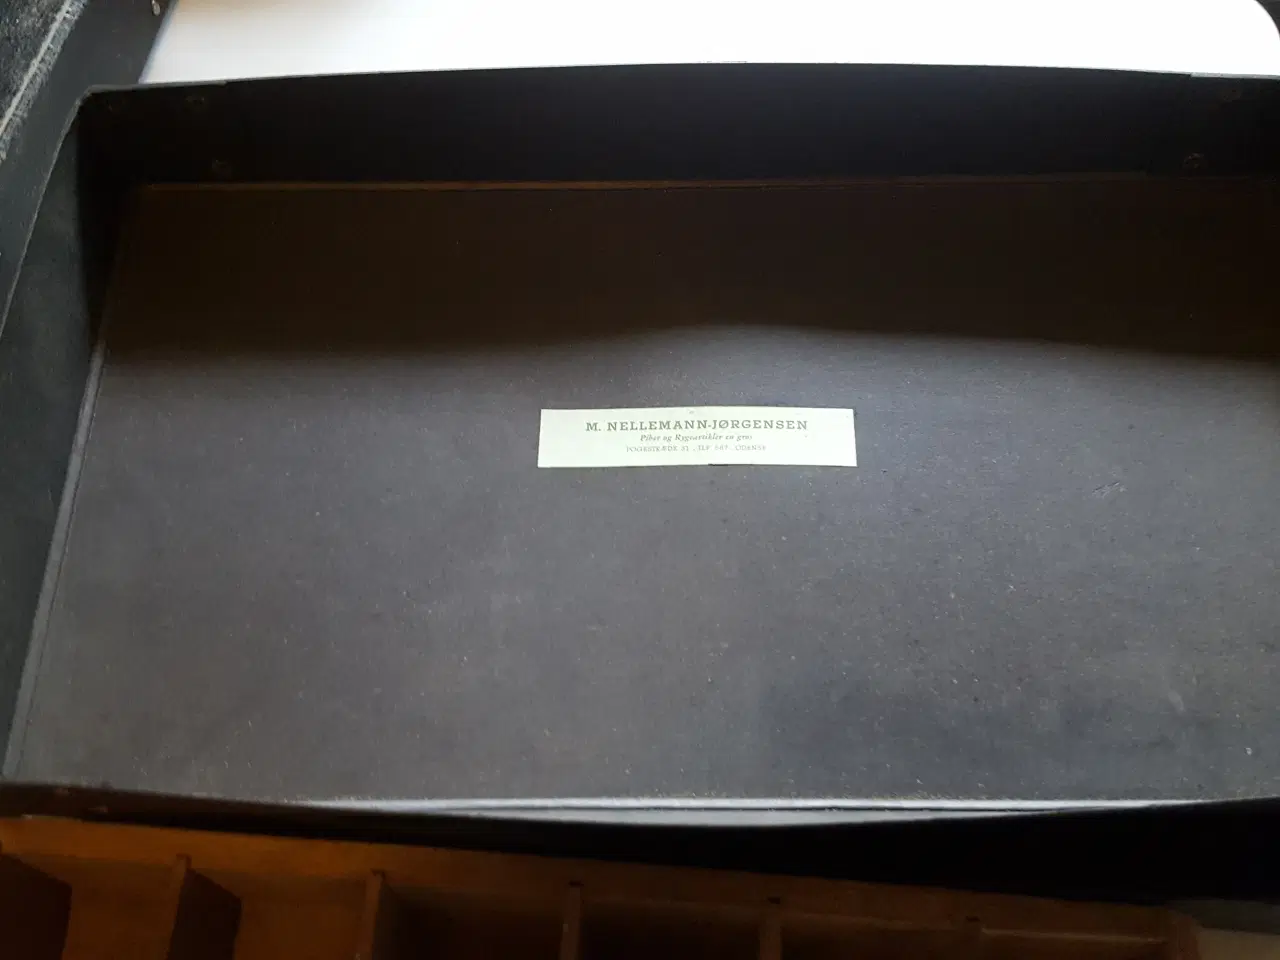 Billede 4 - gammle pibe opbevarnings kasse